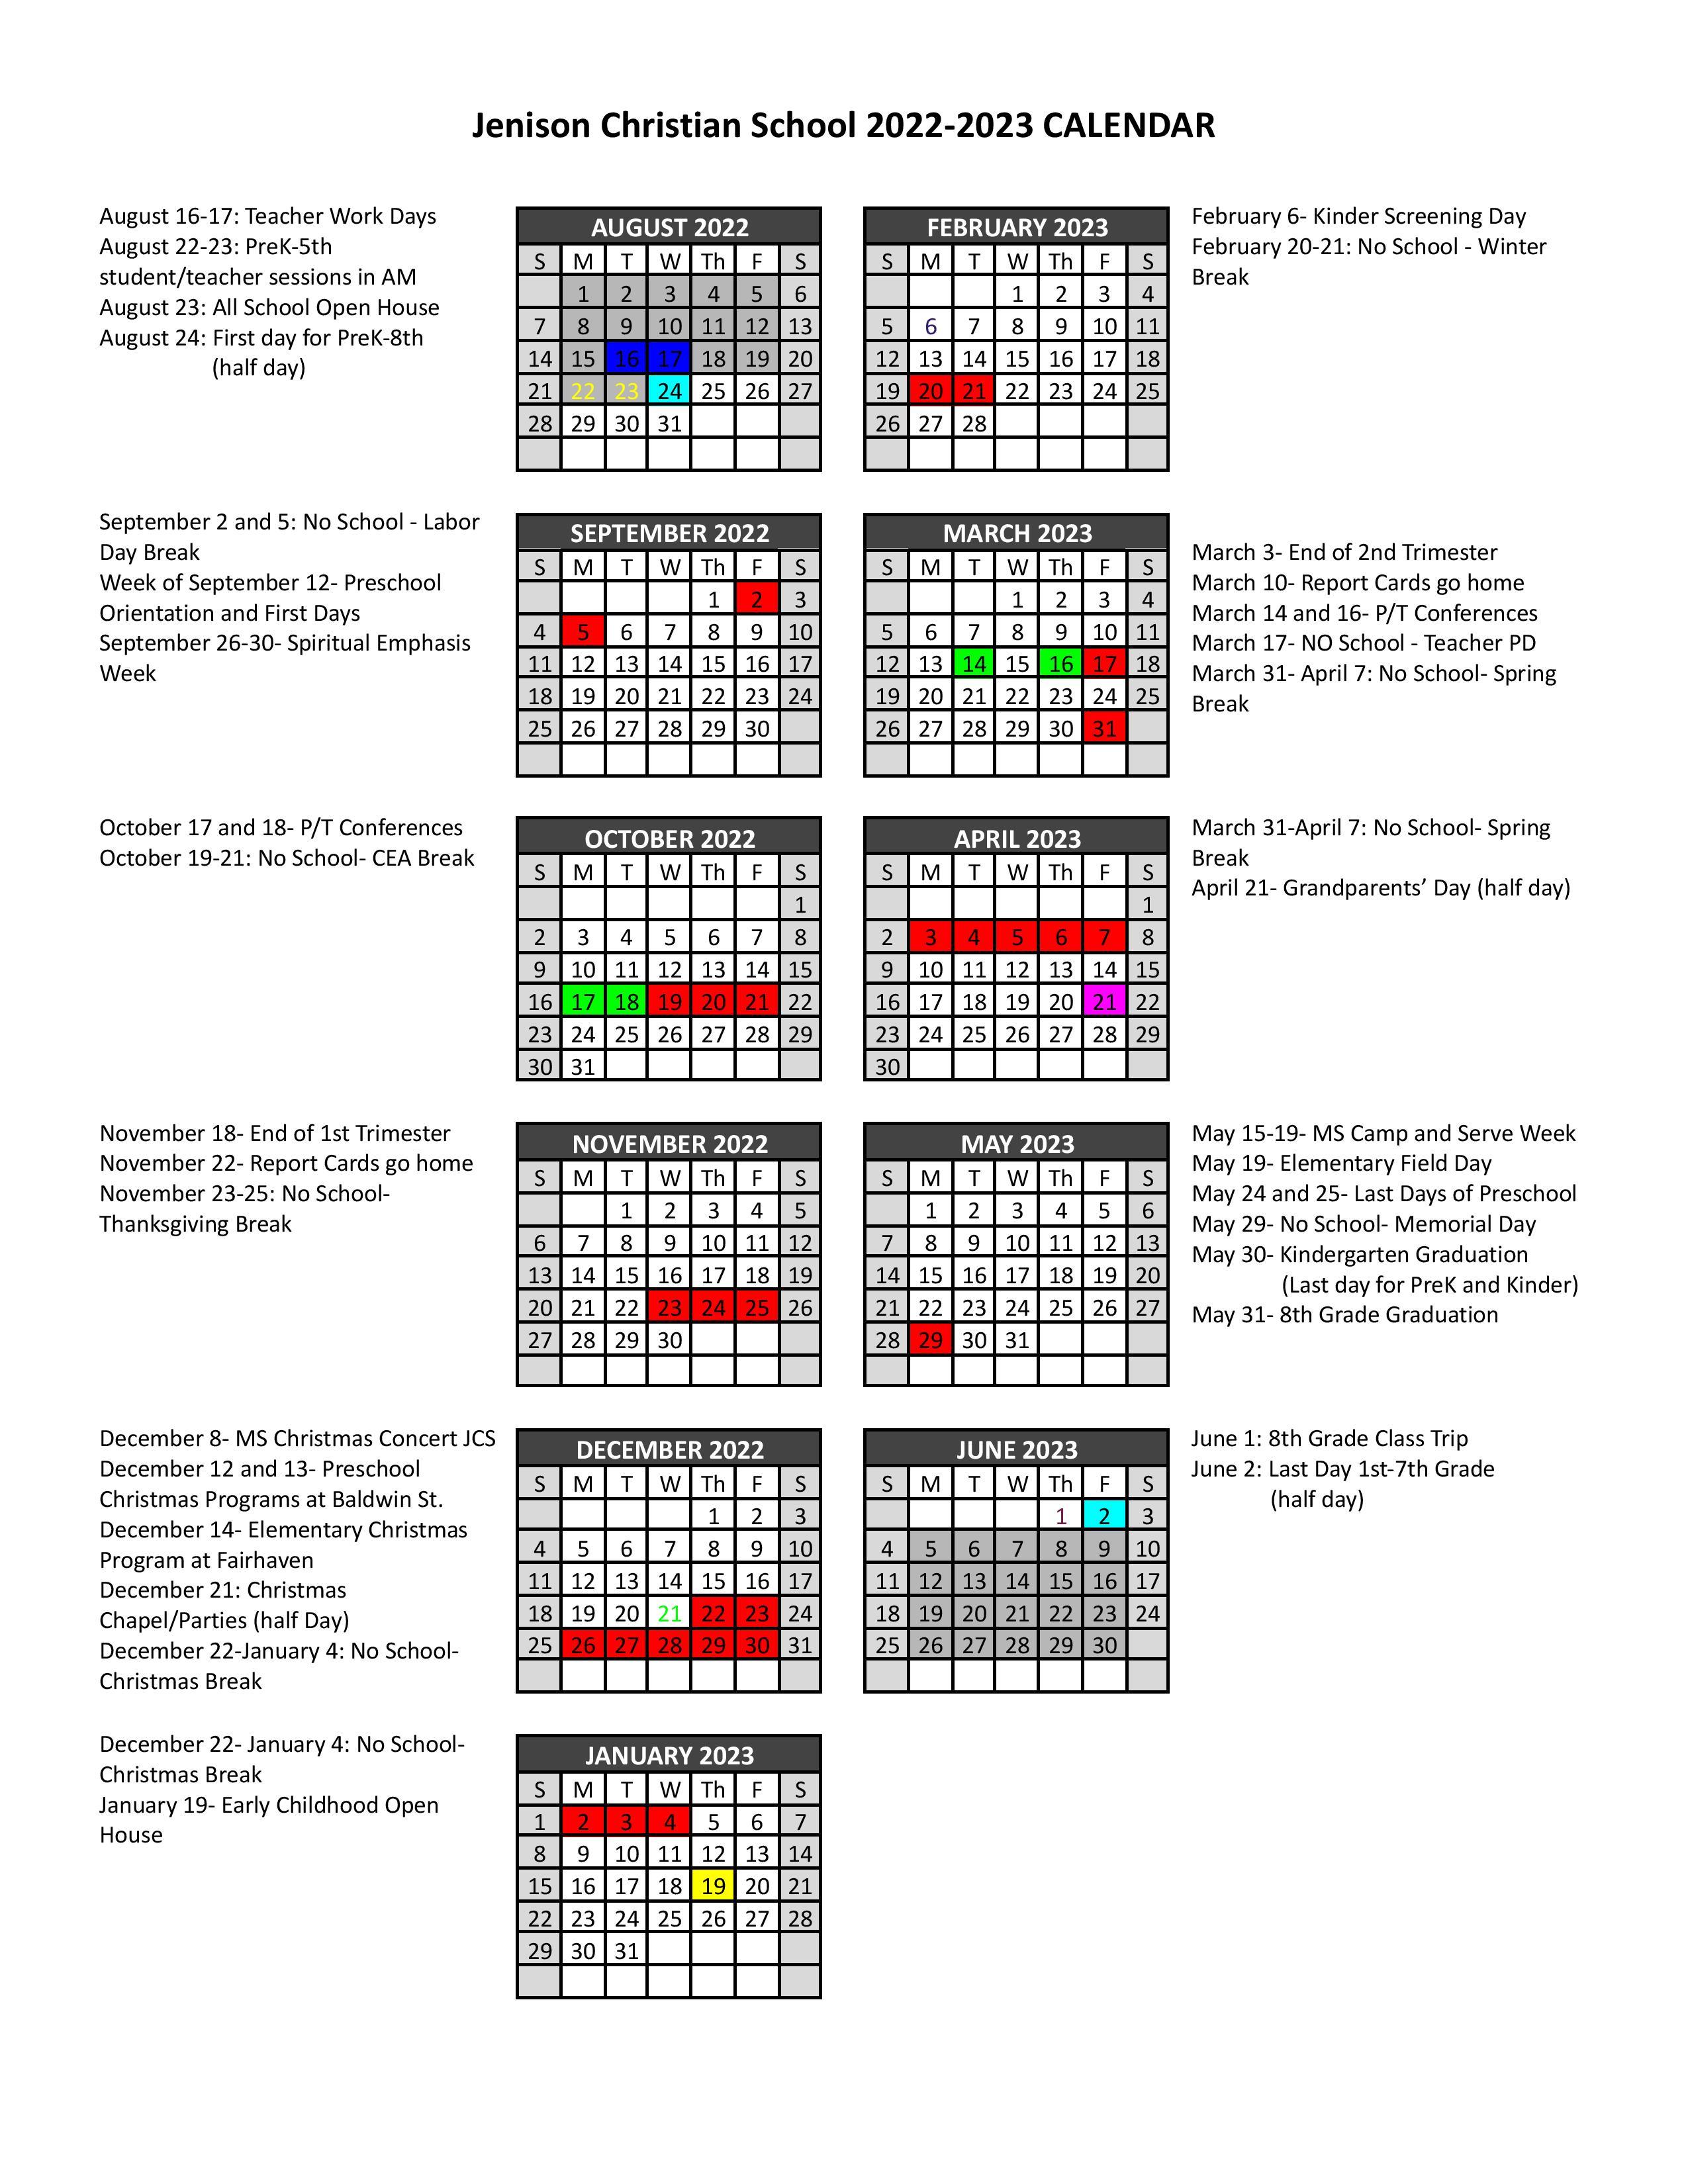 2022-2023-calendar-jenison-christian-school